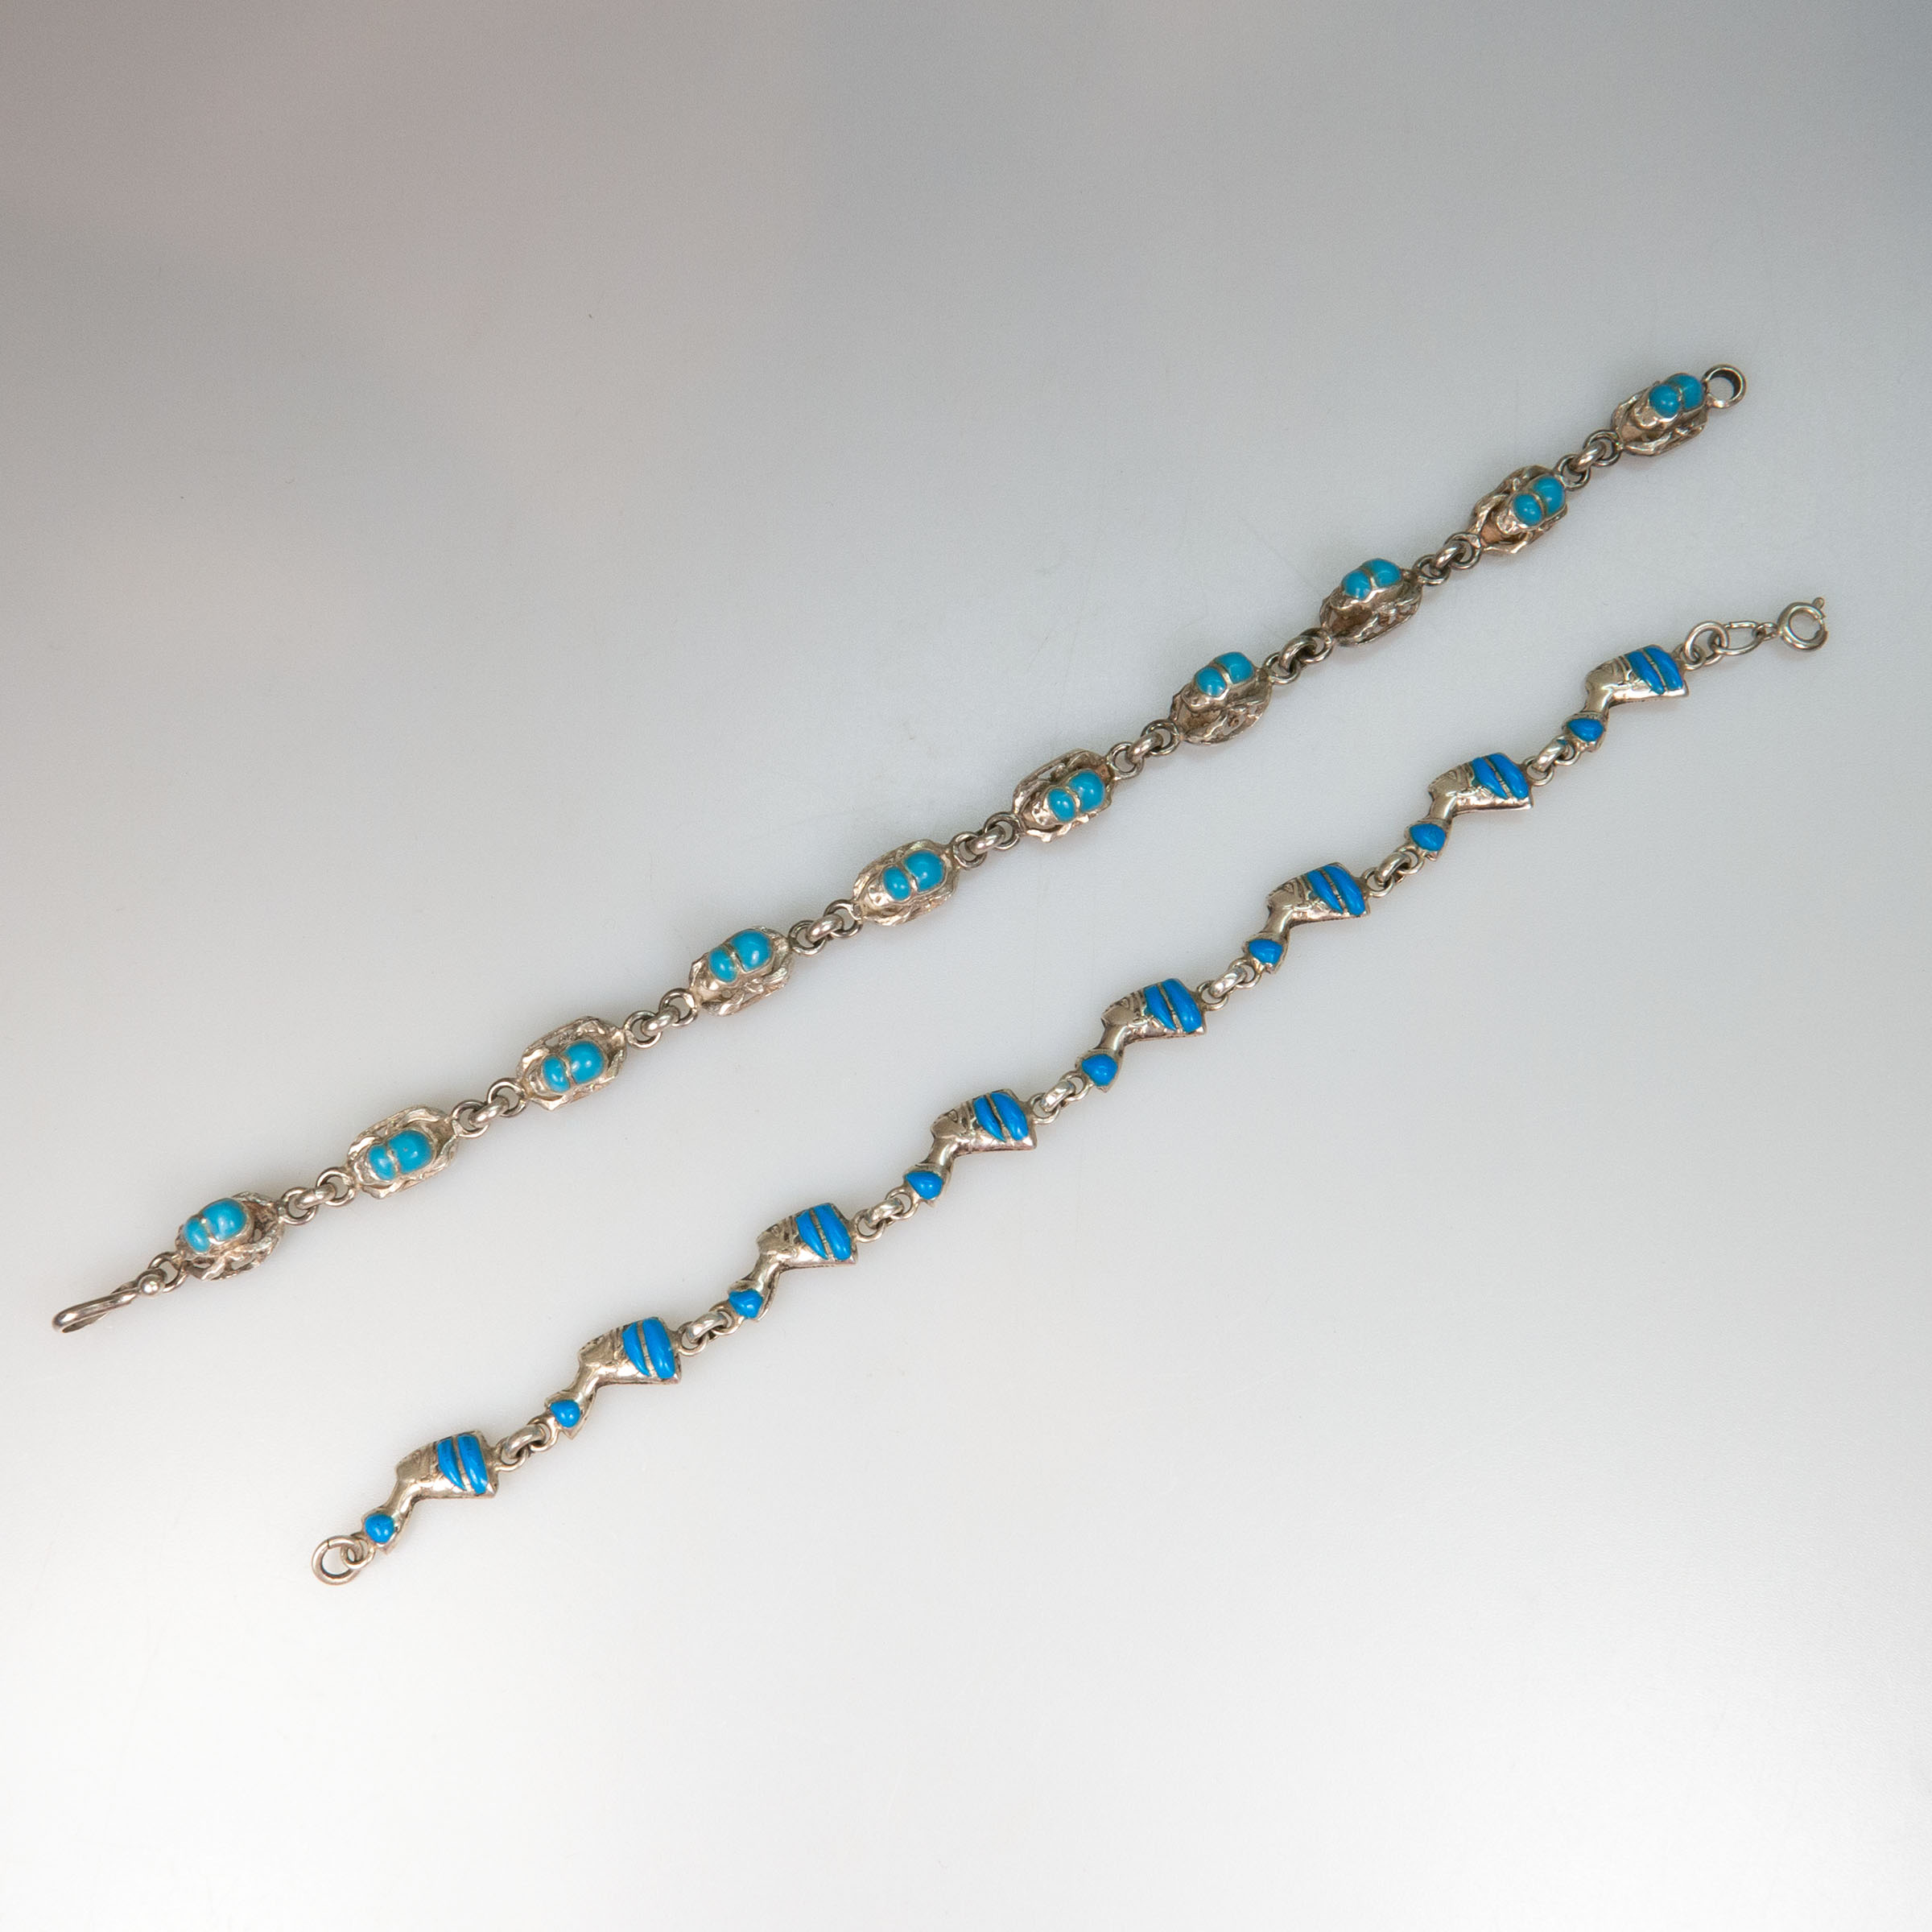 2 Egyptian 800 Grade Silver Bracelets